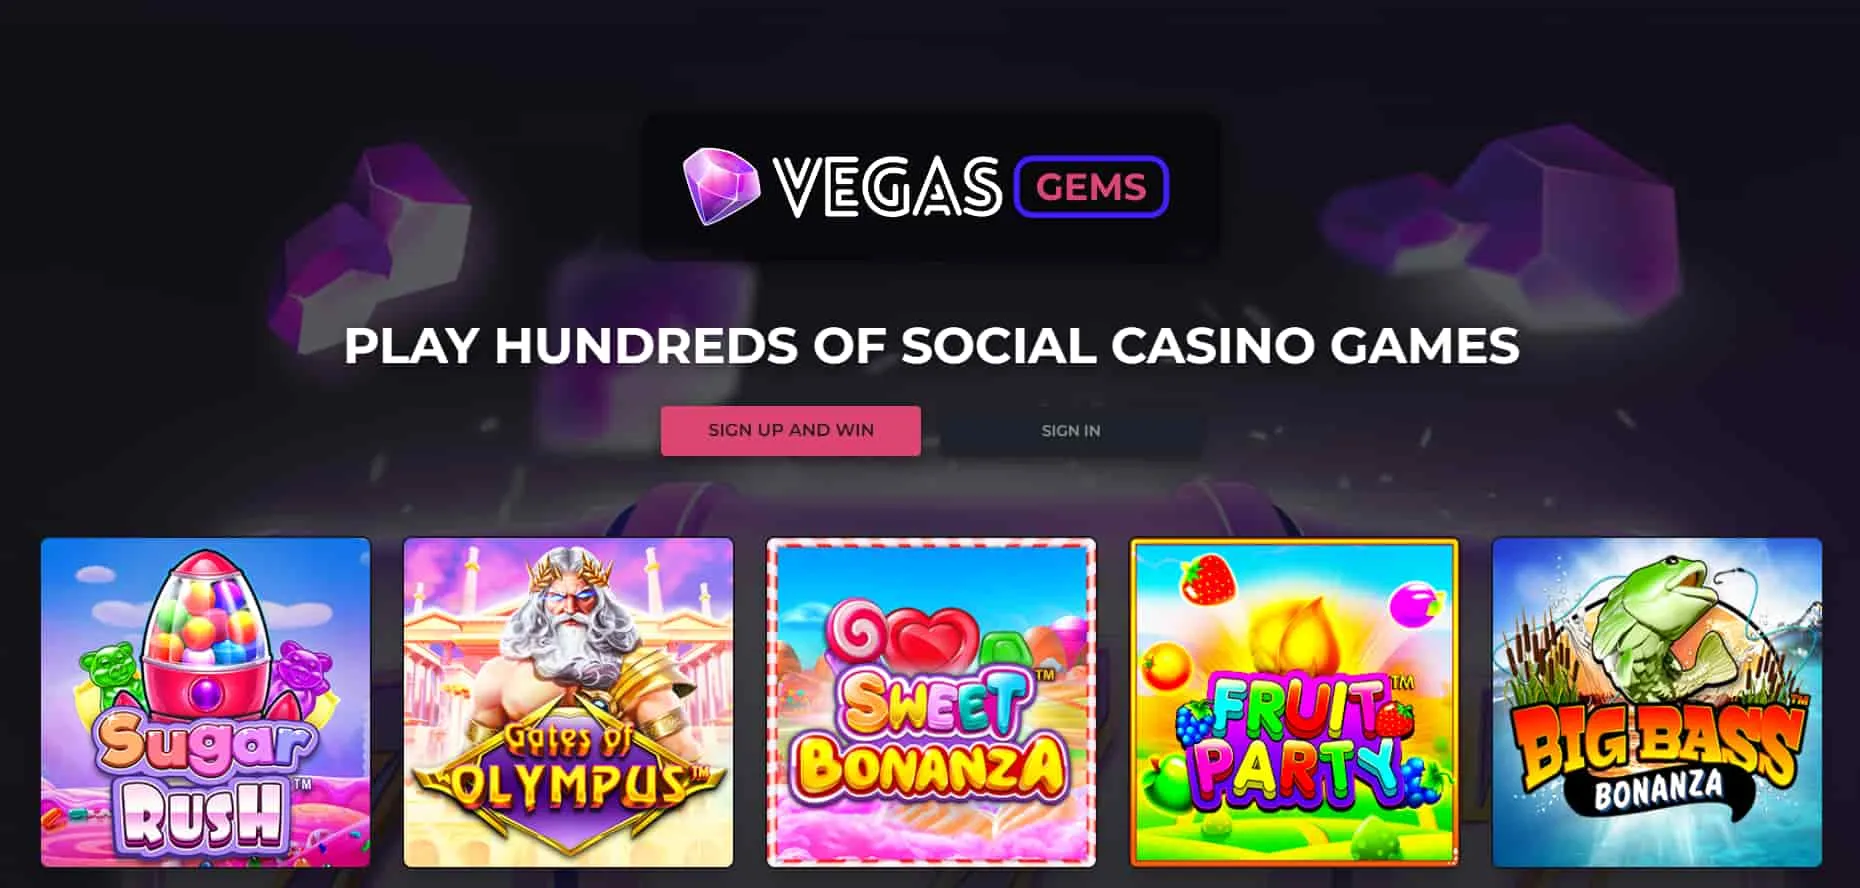 Vegas Gems Sign Up